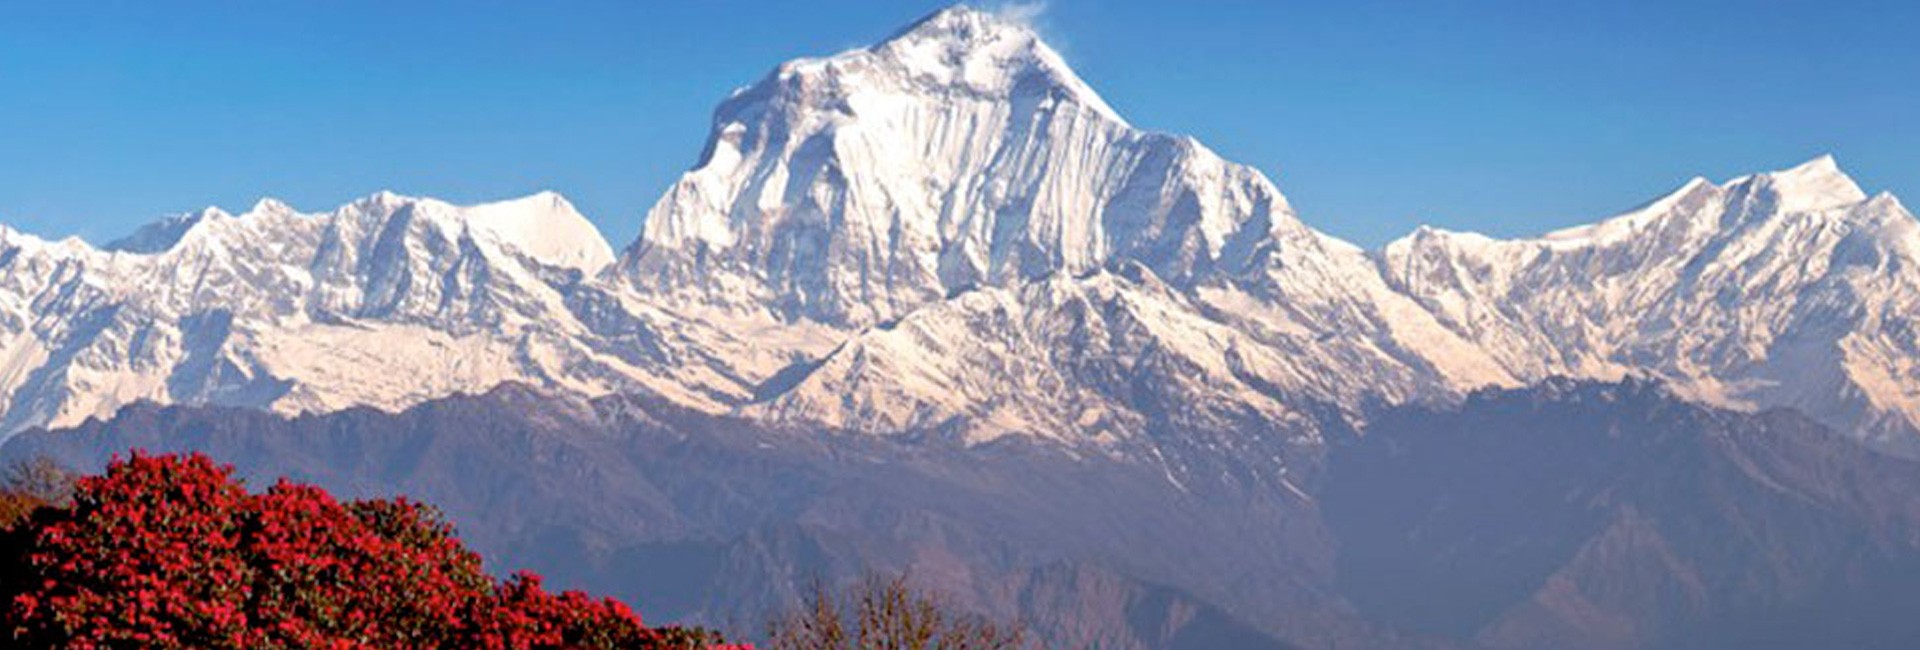 Mountain view from Ghorepani